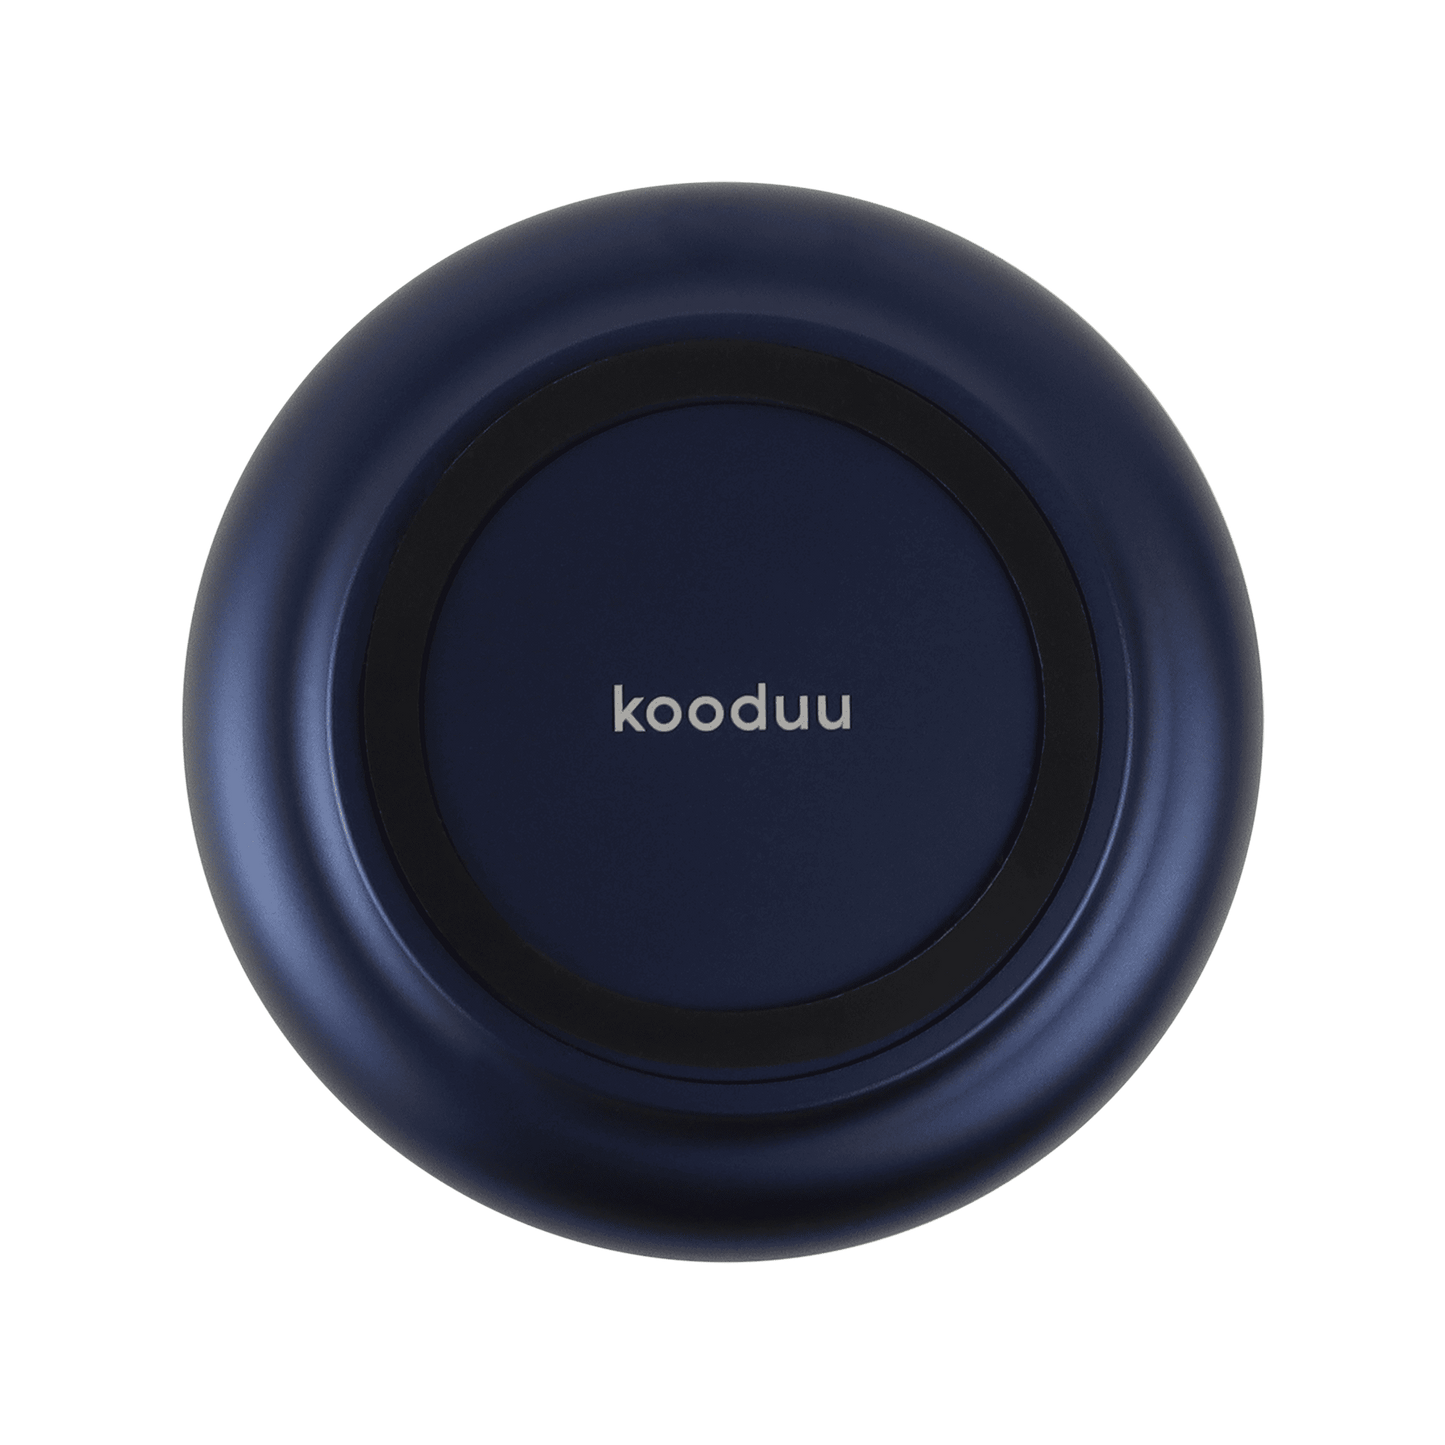 Kooduu Glow 08 Portable LED Flameless Candle in Cobalt Blue